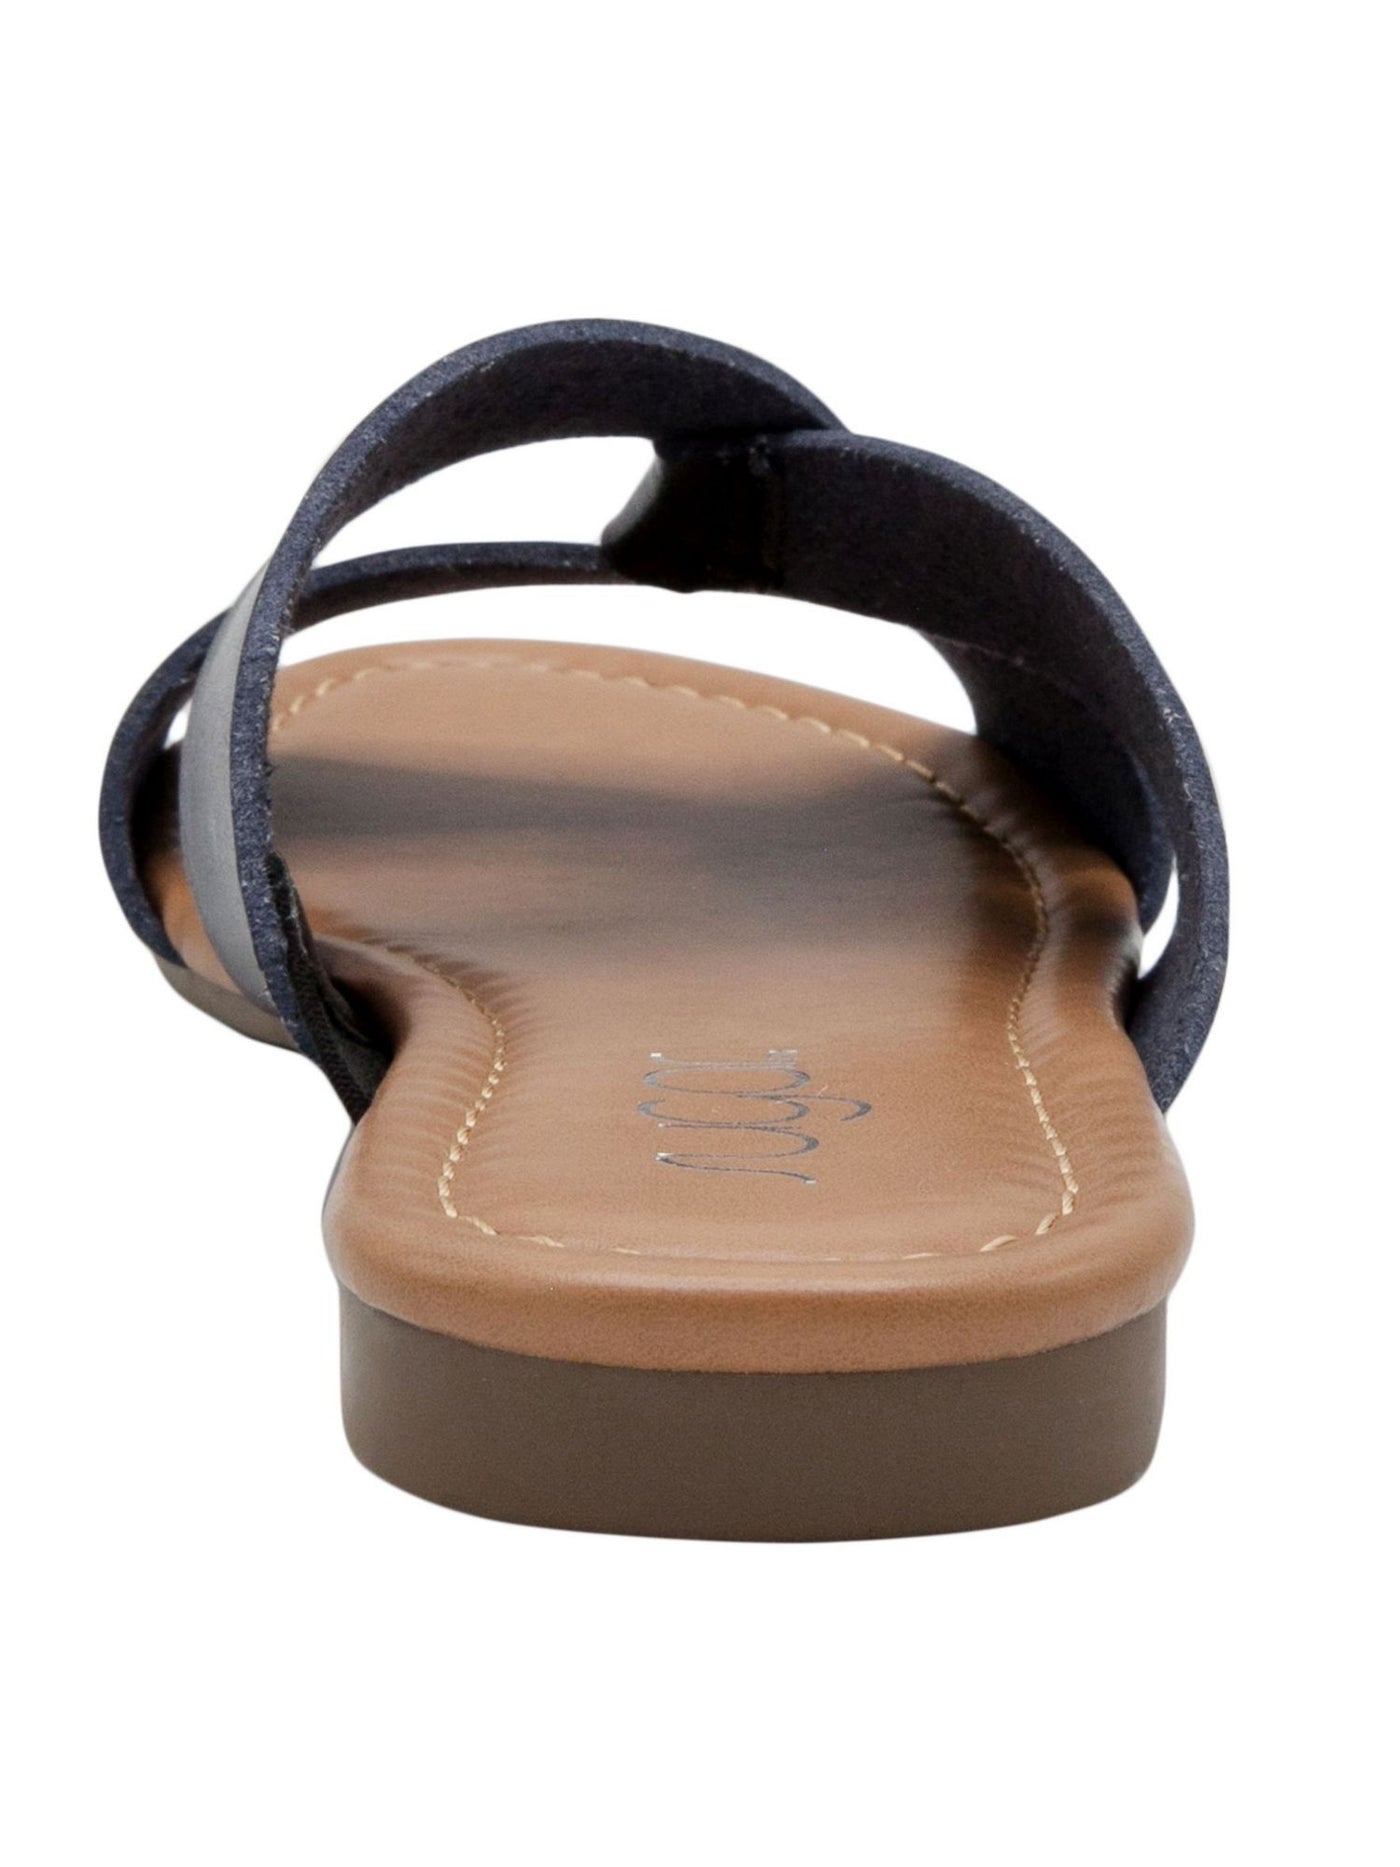 SUGAR Womens Black Knotted Design Comfort Woven Olena Round Toe Block Heel Slip On Slide Sandals Shoes 8.5 M